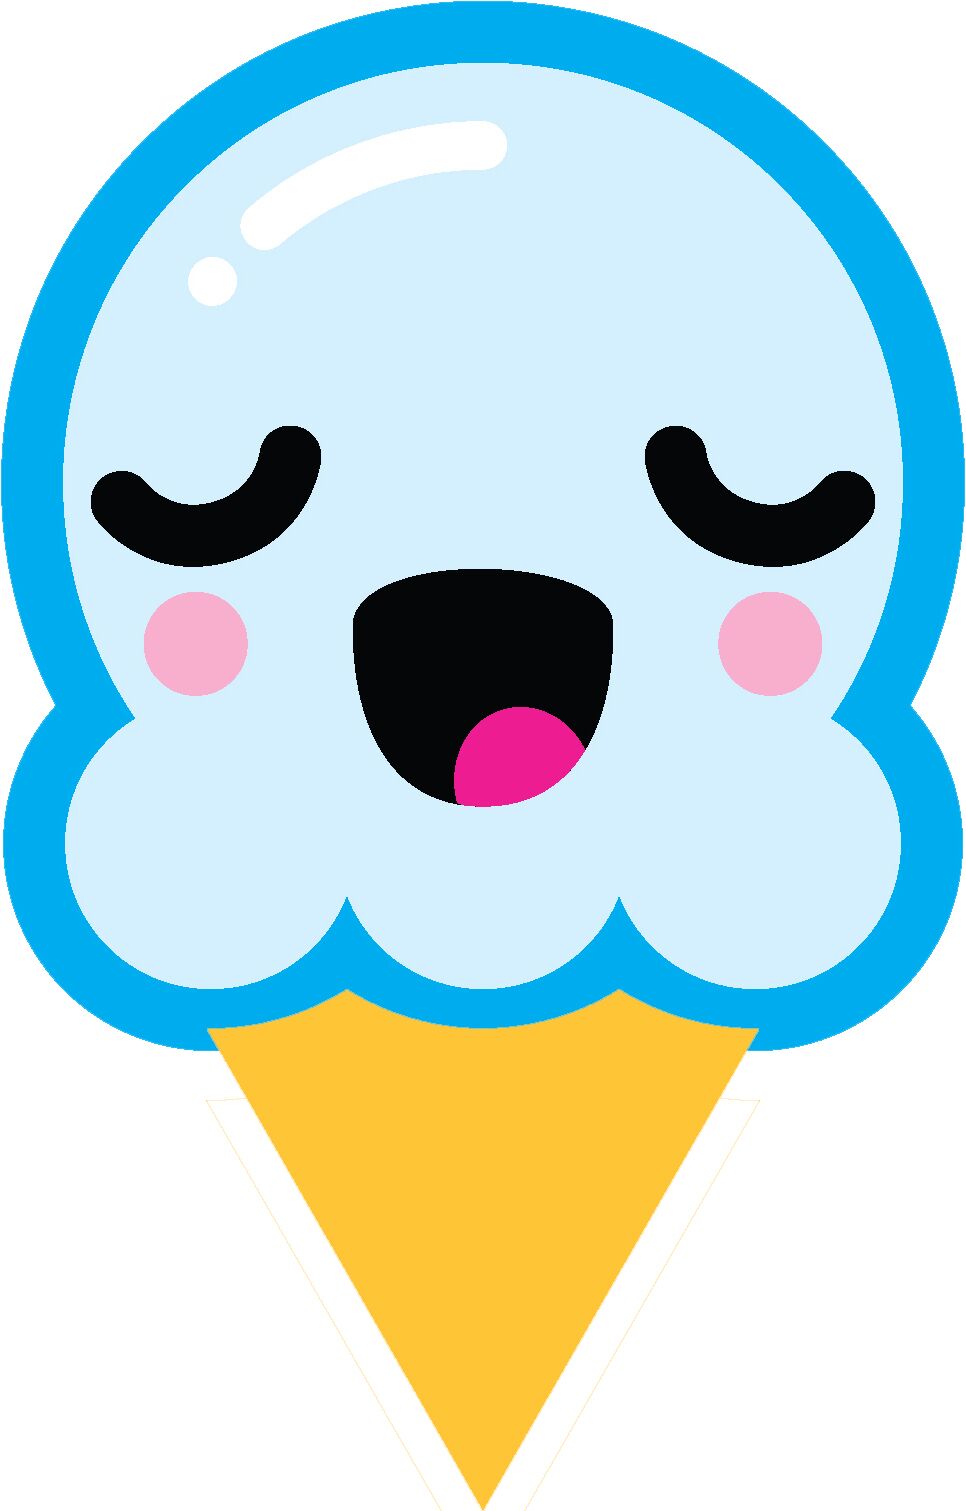 Delicious Yummy Dessert Treat Cartoon Emoji - Ice Cream Cone #2 Vinyl Decal Sticker